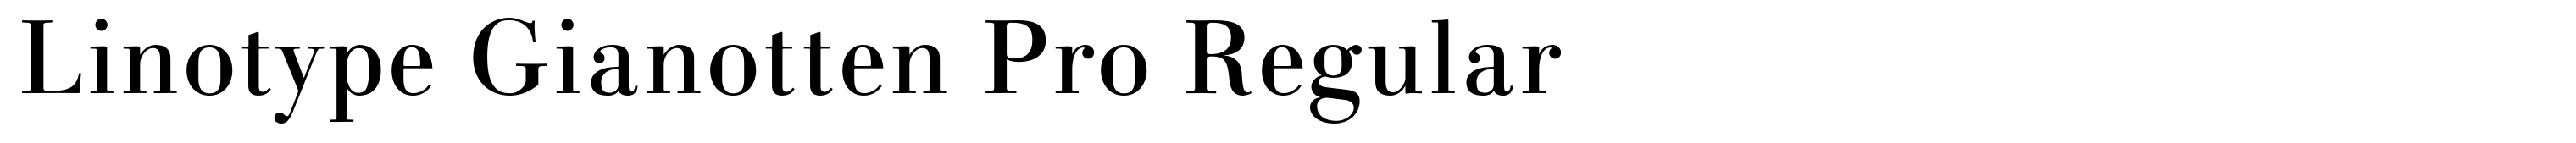 Linotype Gianotten Pro Regular